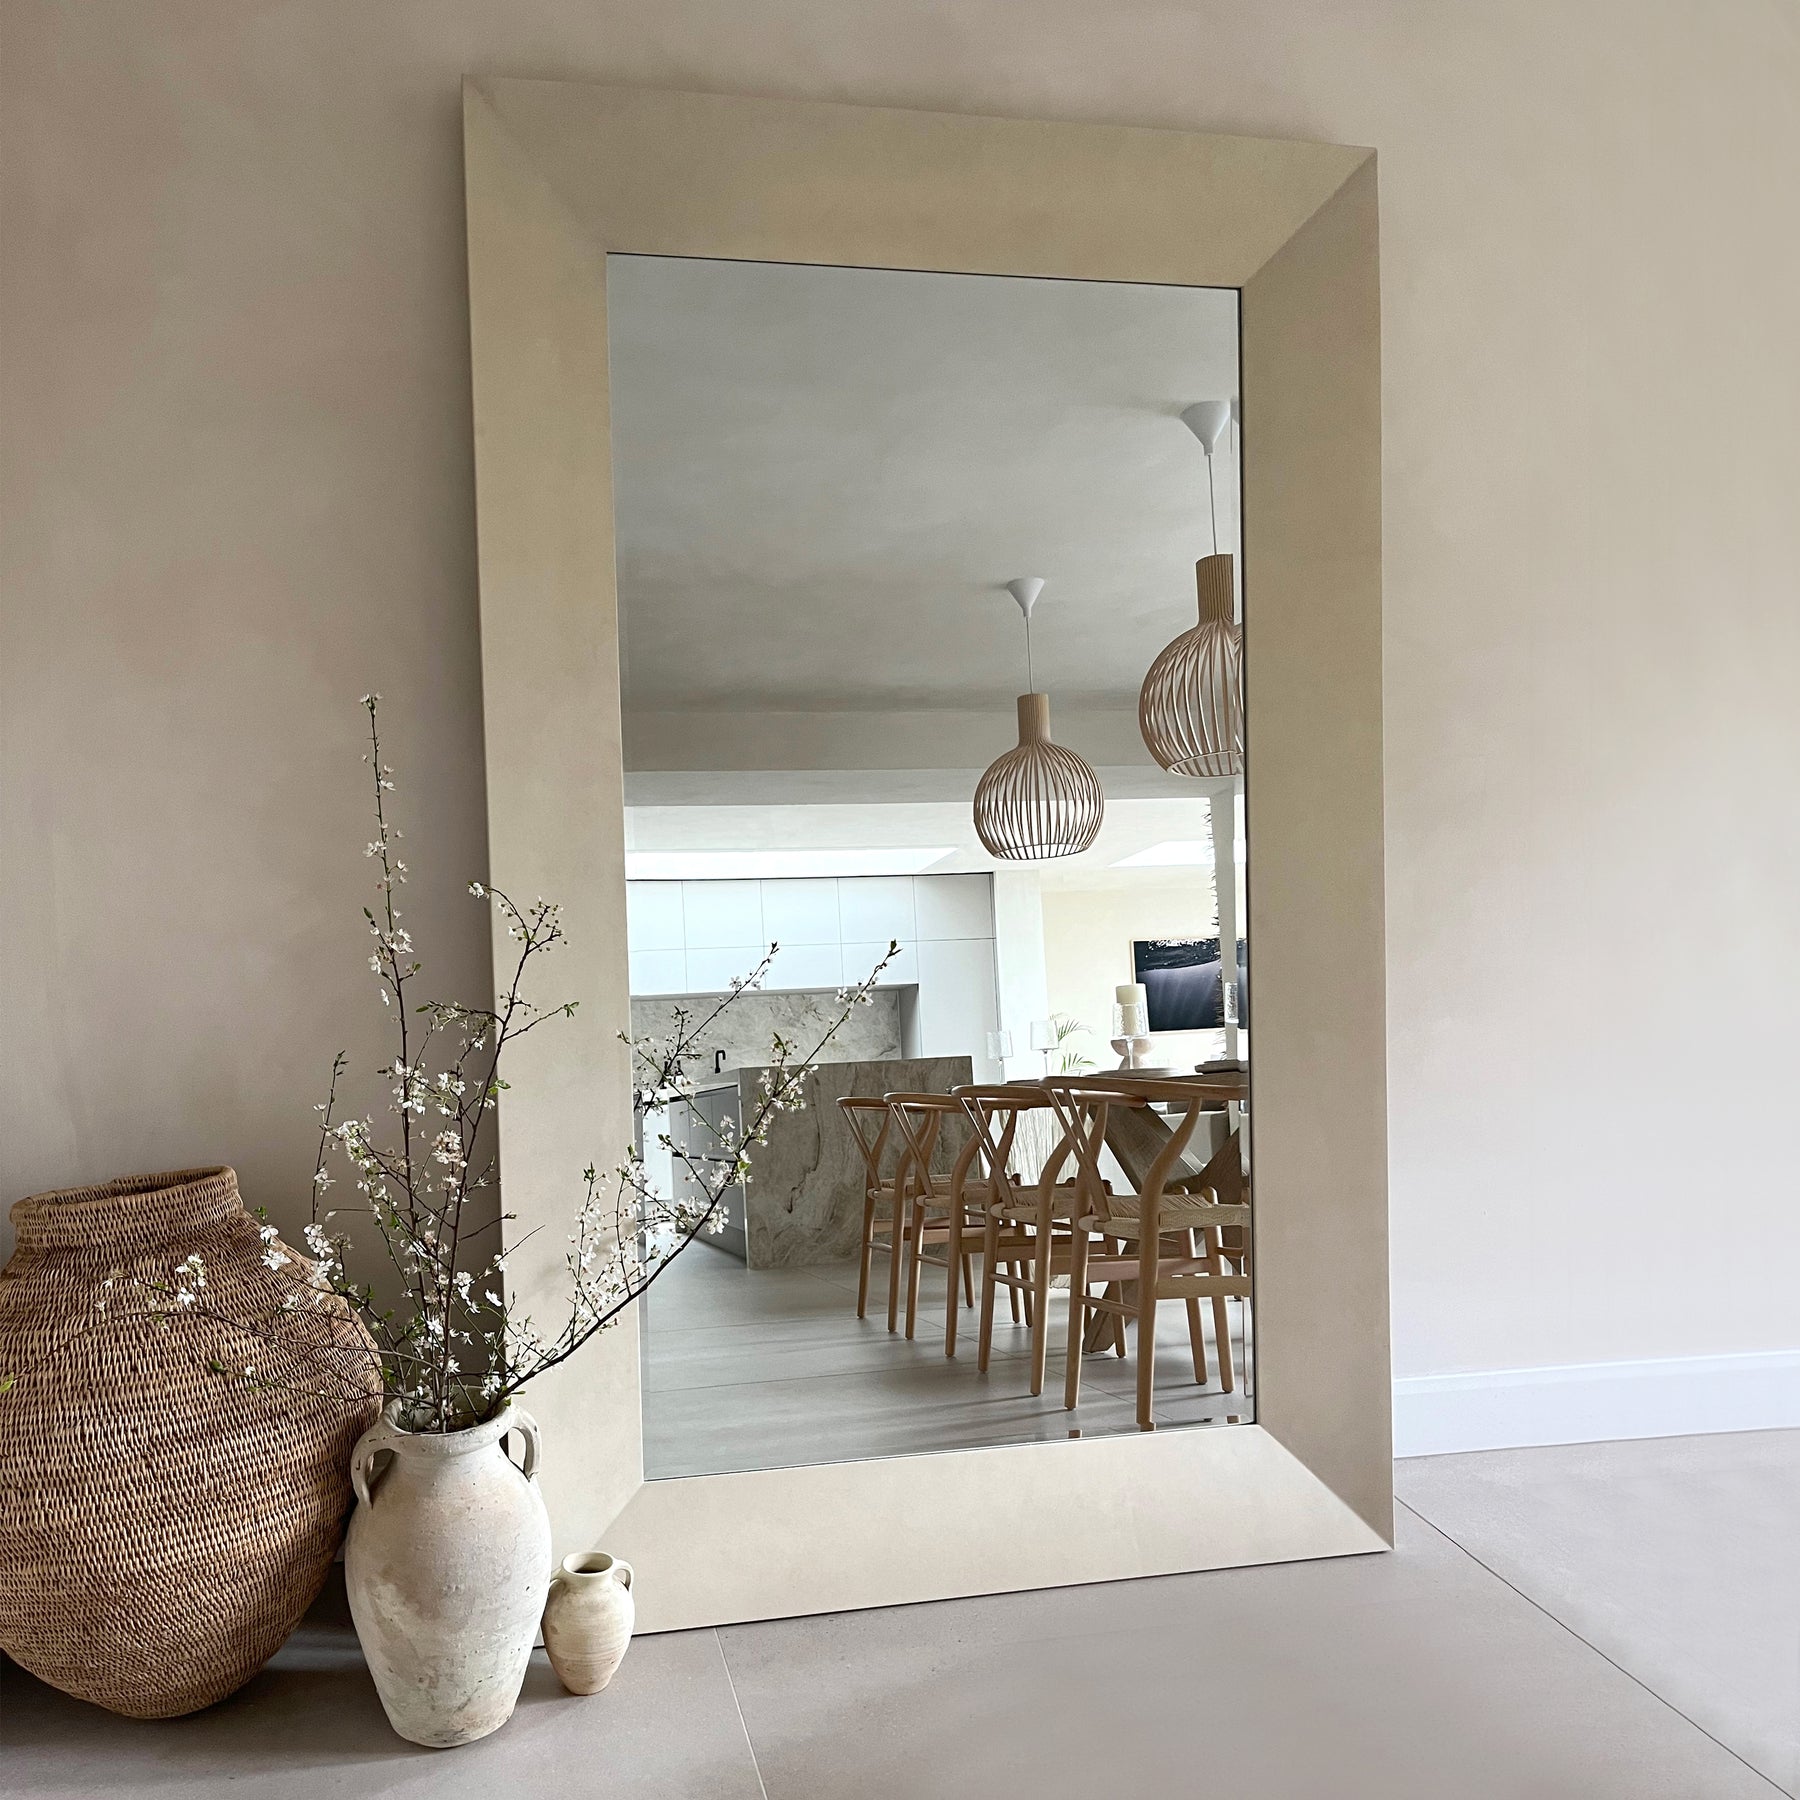 Full length extra large rectangular concrete mirror with ceramics